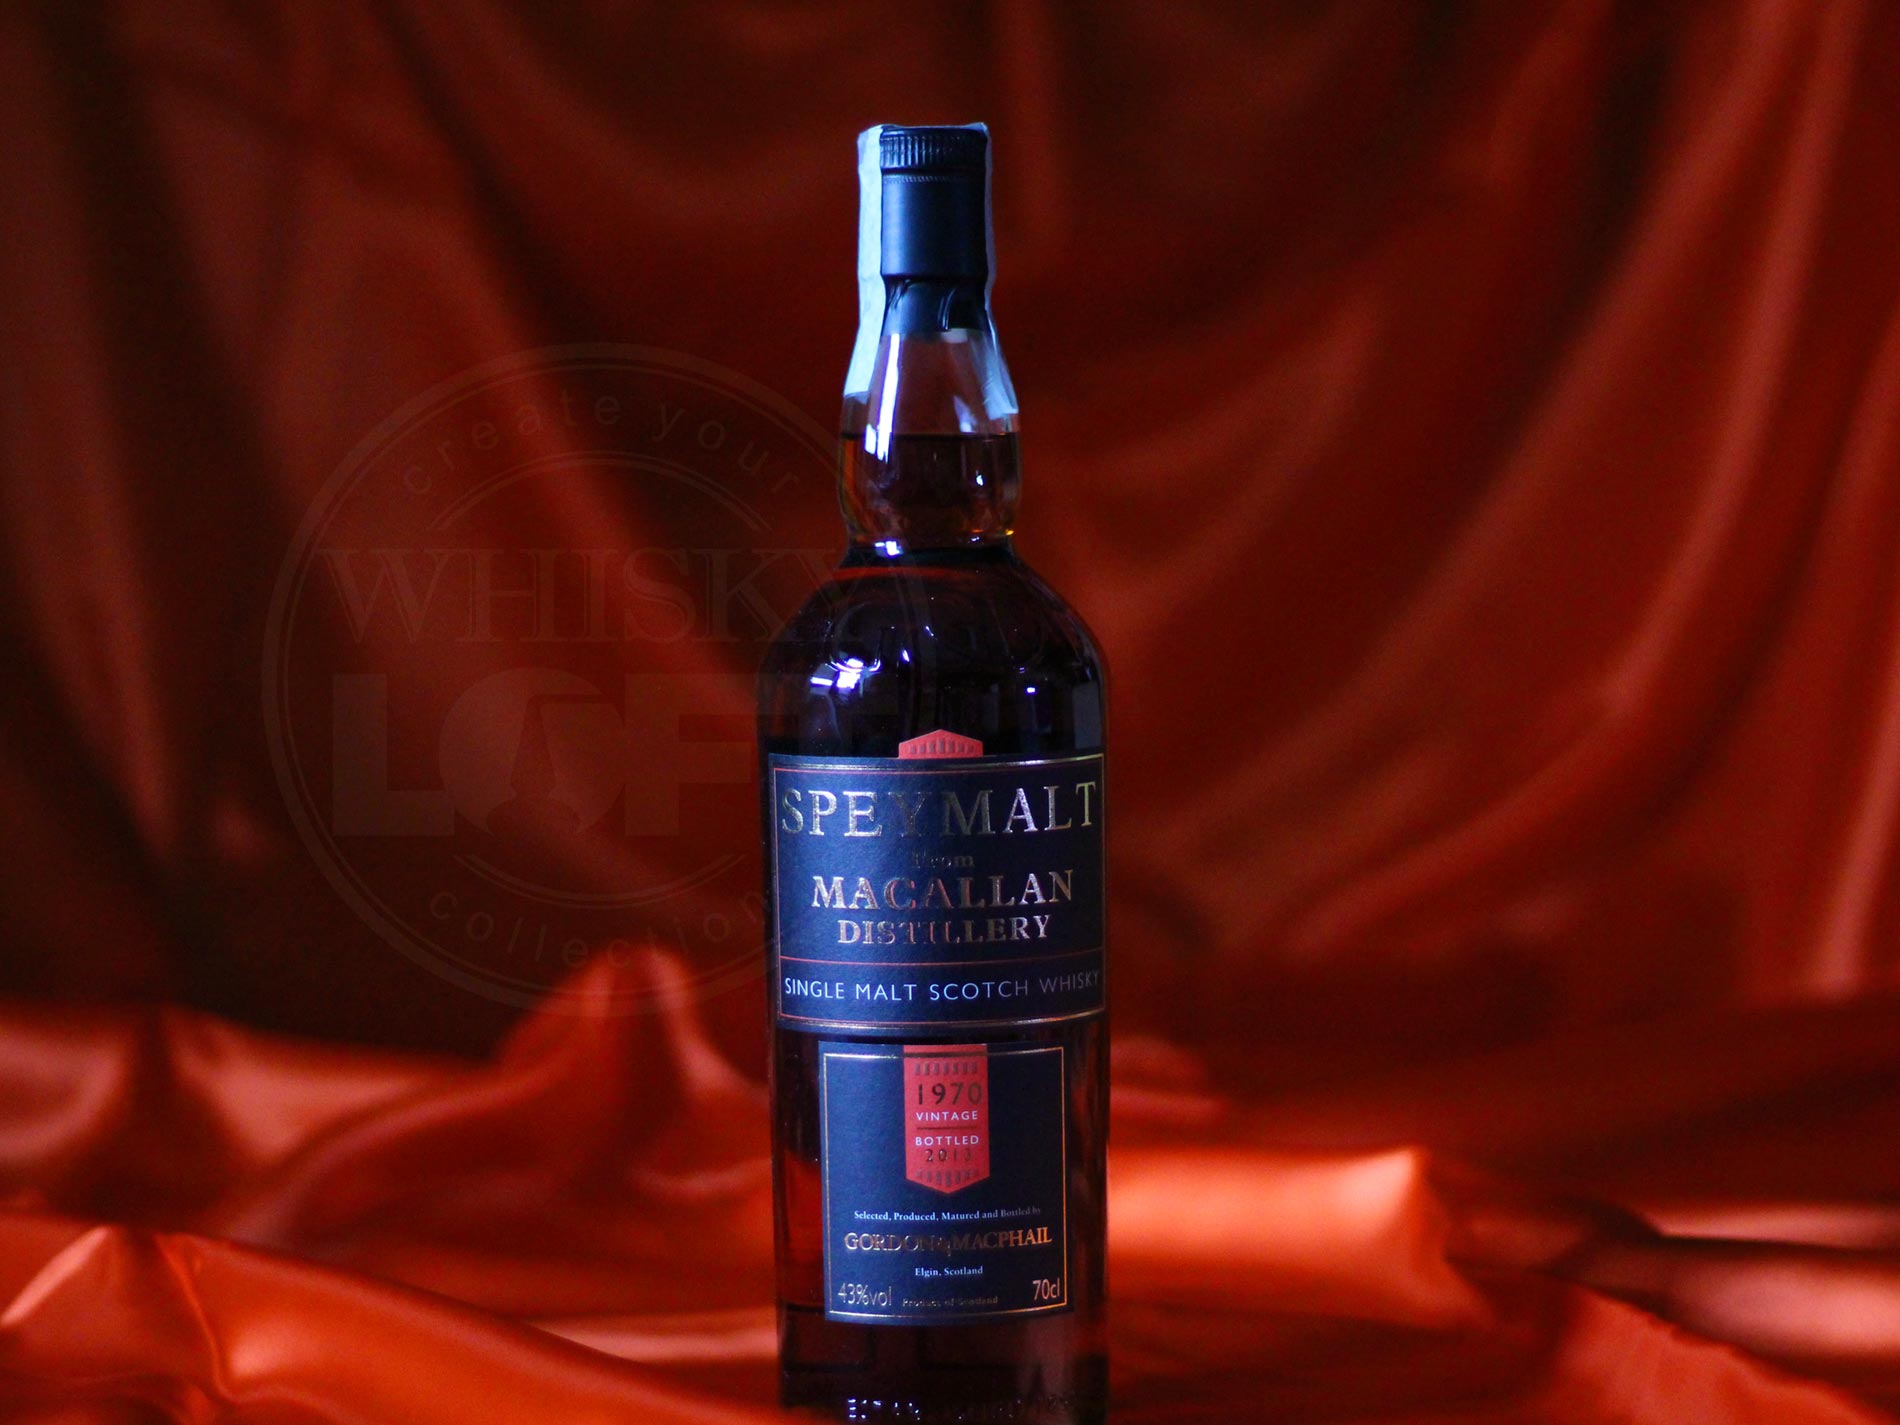 The Macallan, Gordon & MacPhail (GM), Single Malt Scotch Whisky, 1970 distilled.